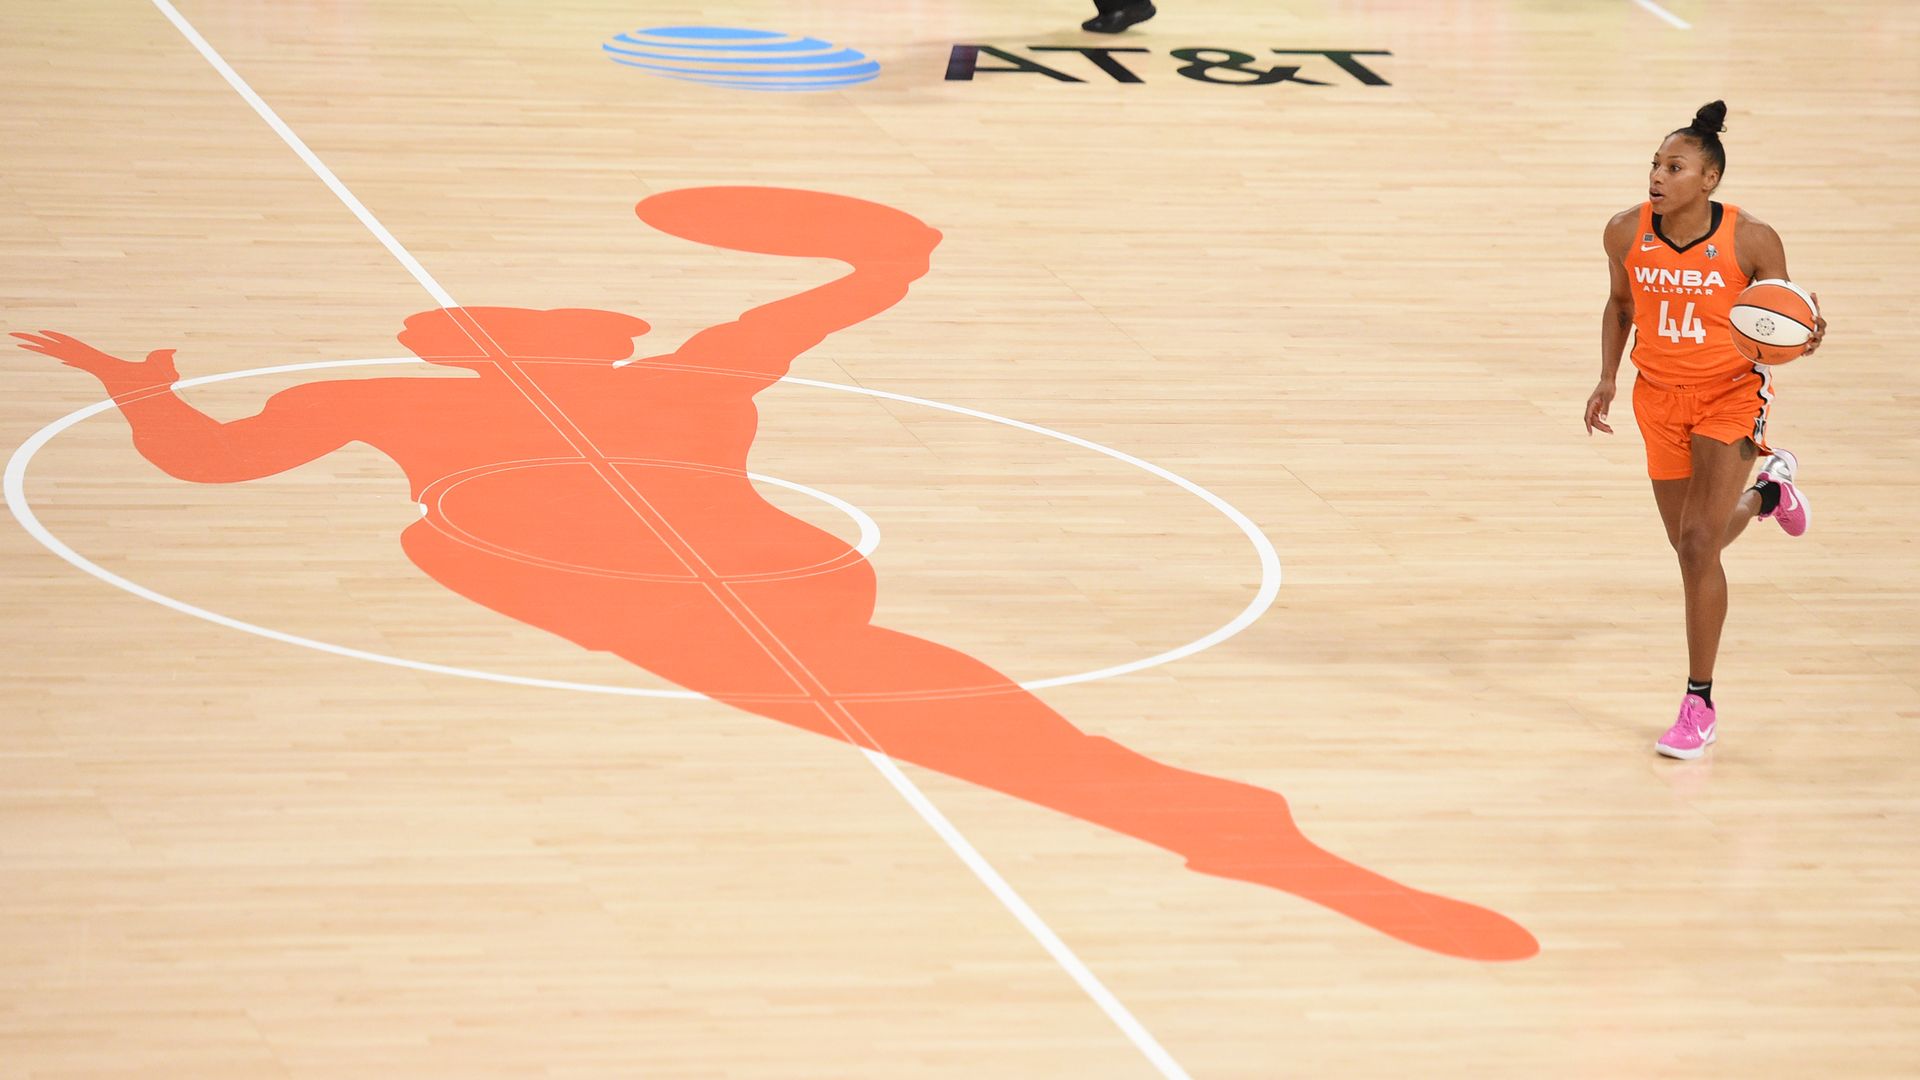 WNBA logo at midcourt